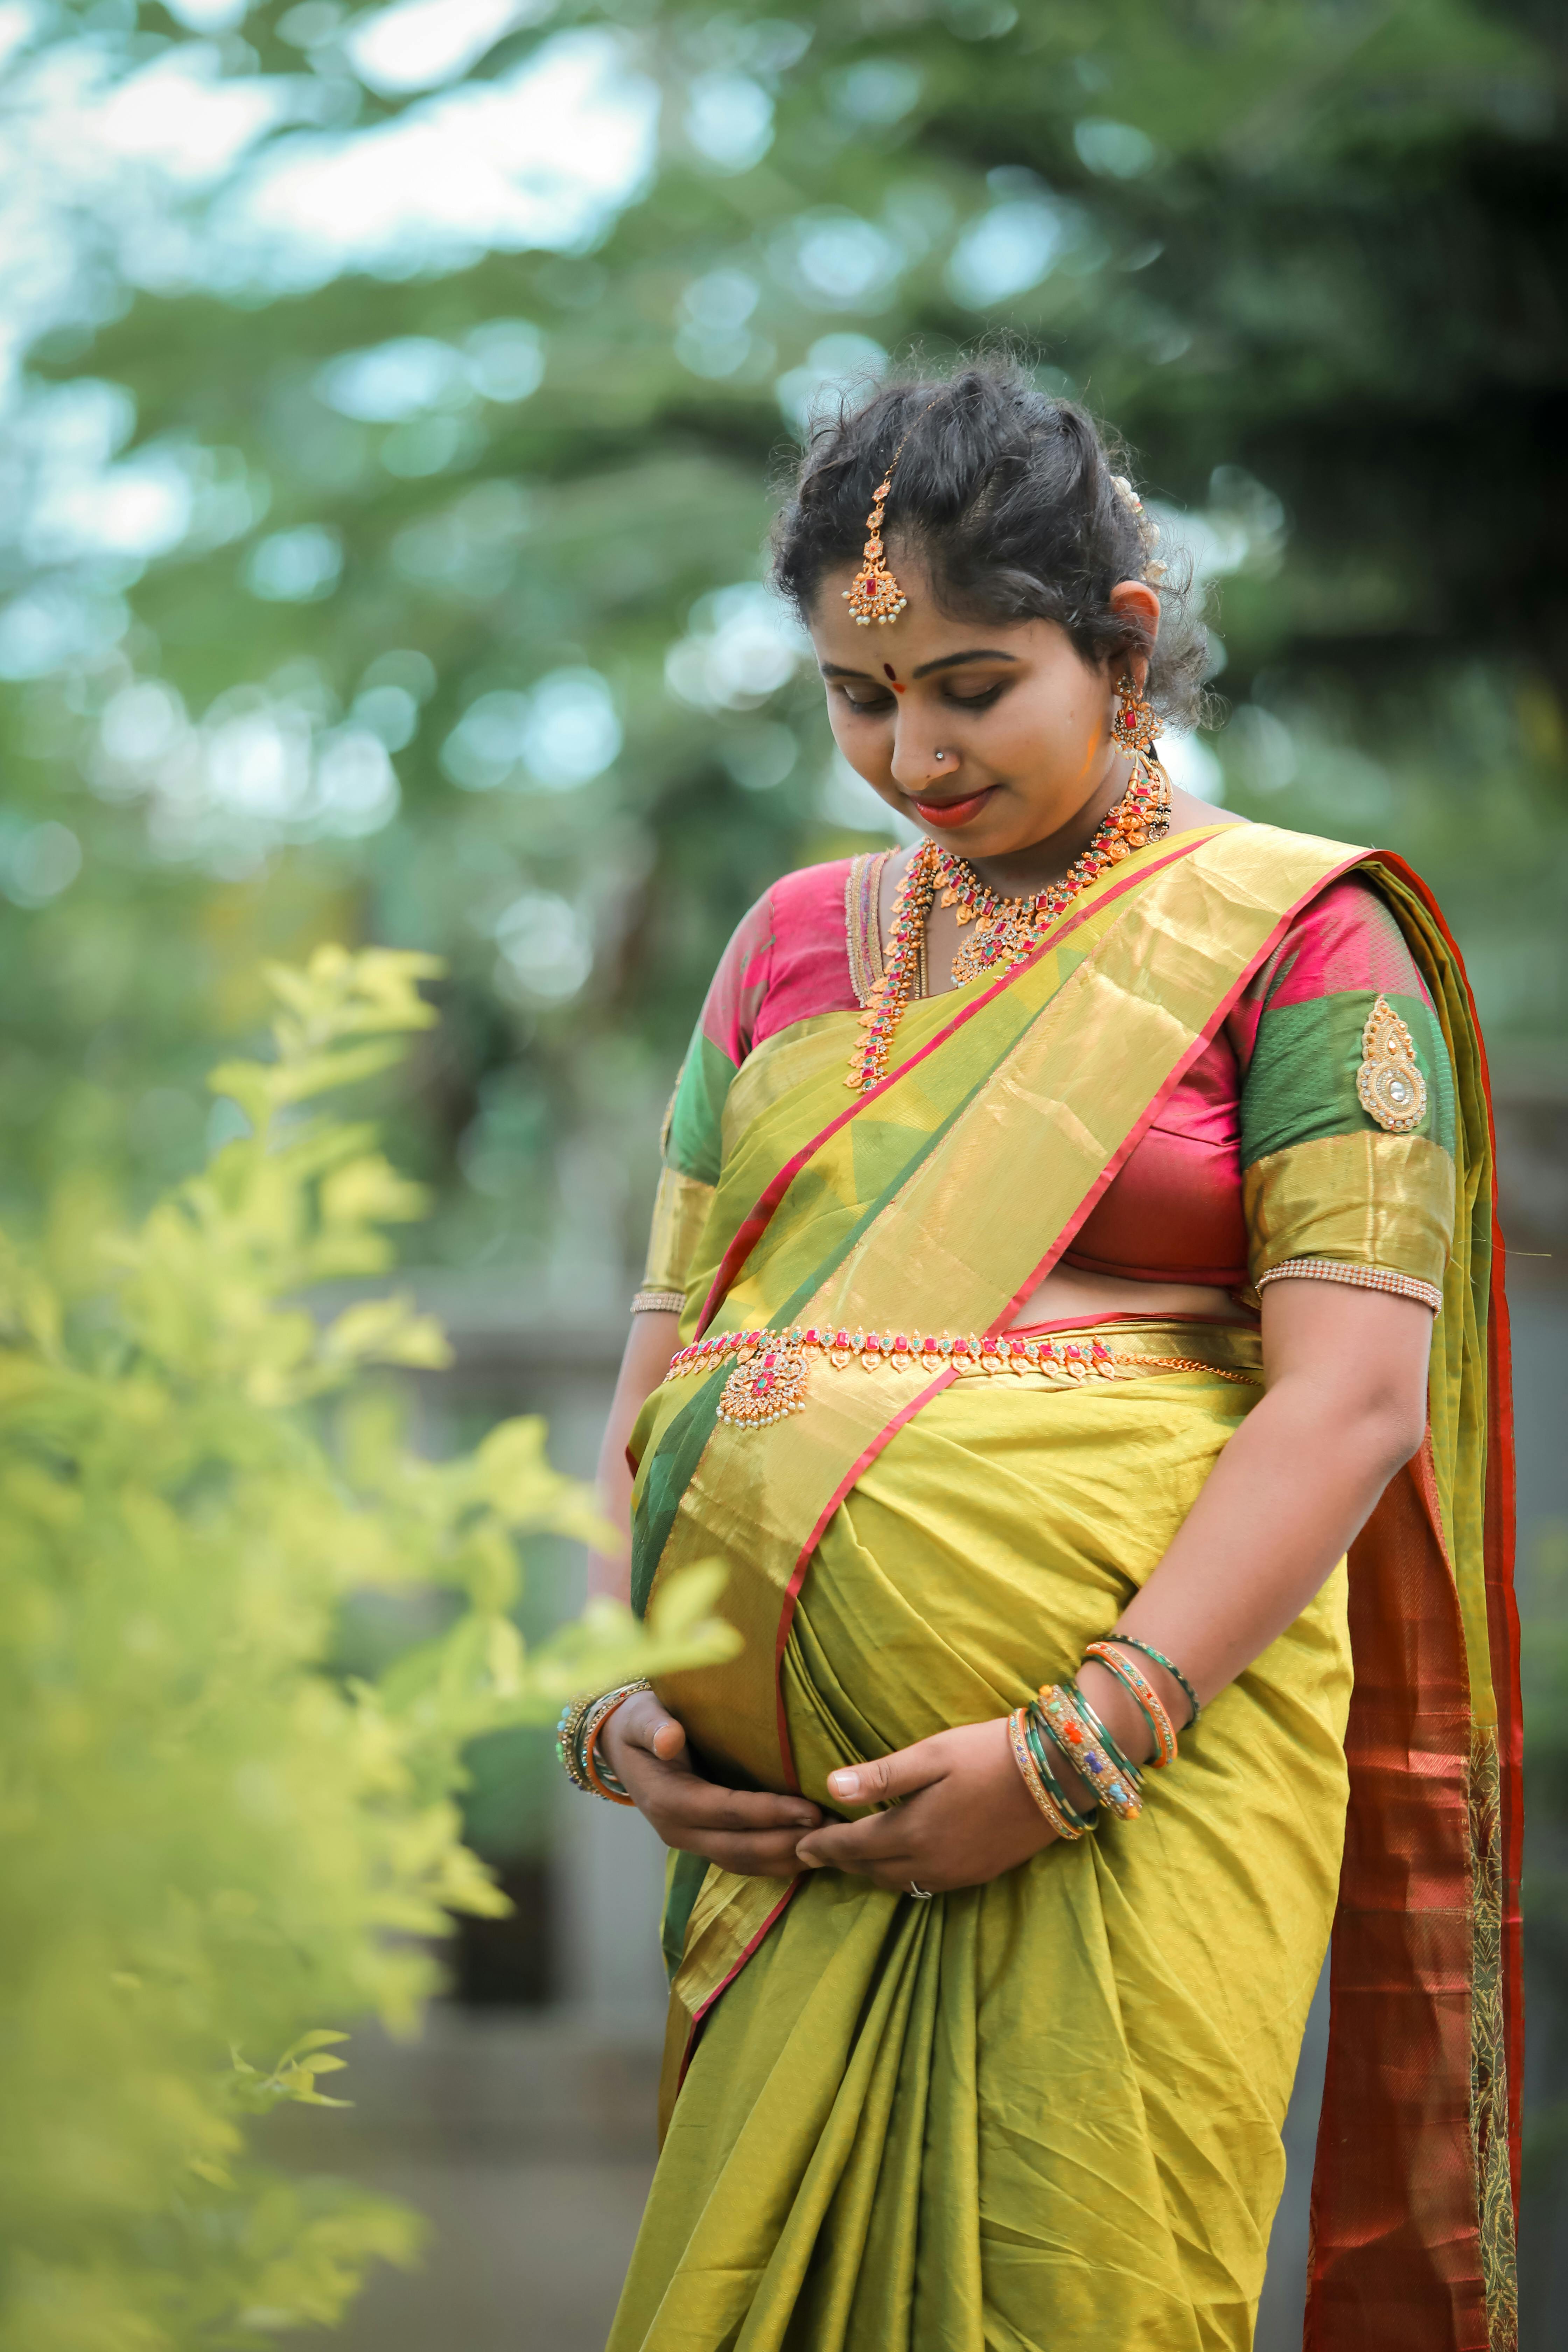 Pregnant Woman Wearing Saree · Free Stock Photo